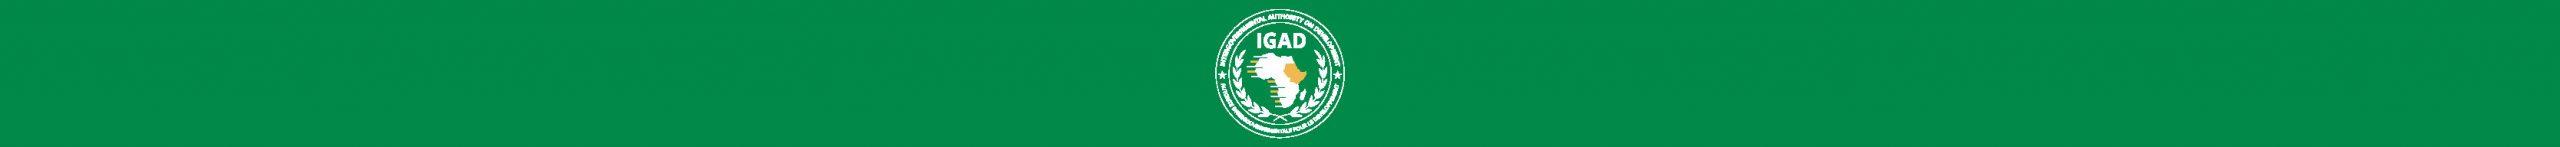 The IGAD Region